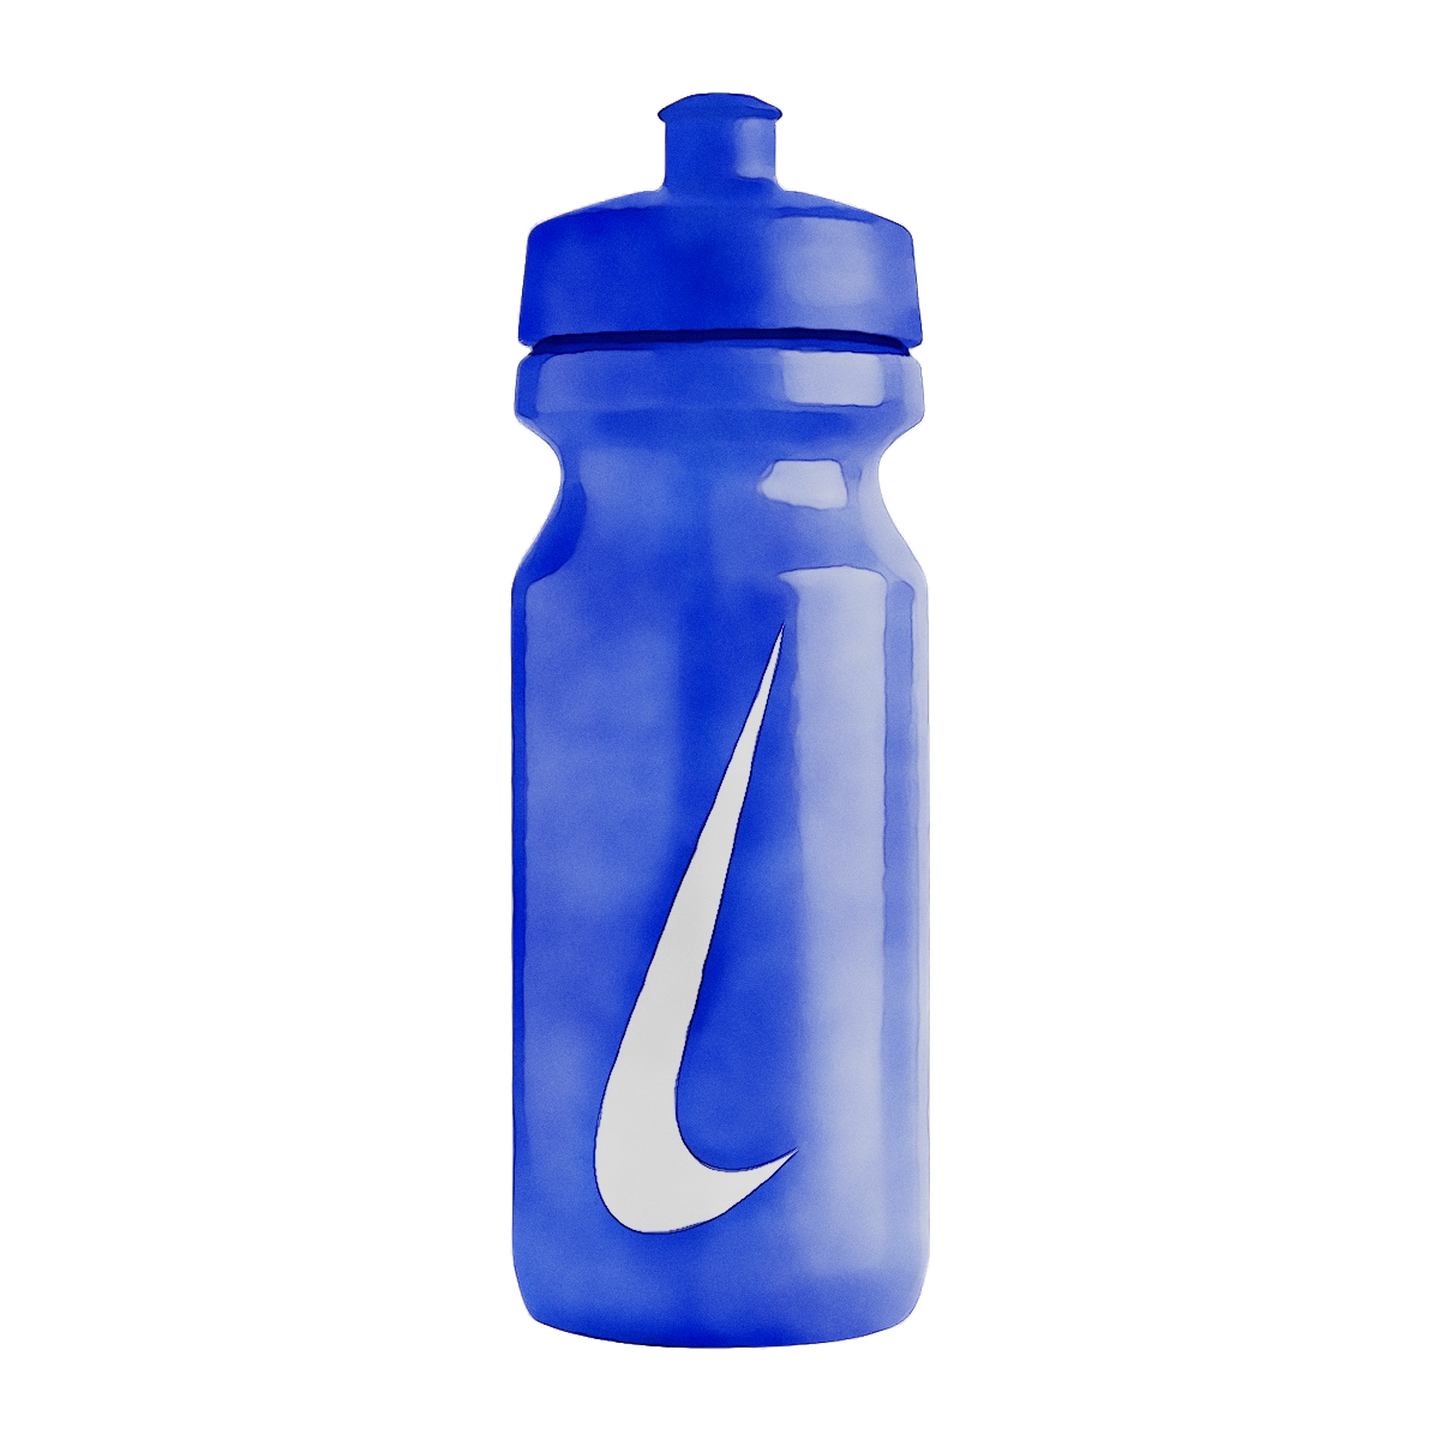 Water Bottles Plastic bottle - png download - 1440*1440 - Free ...